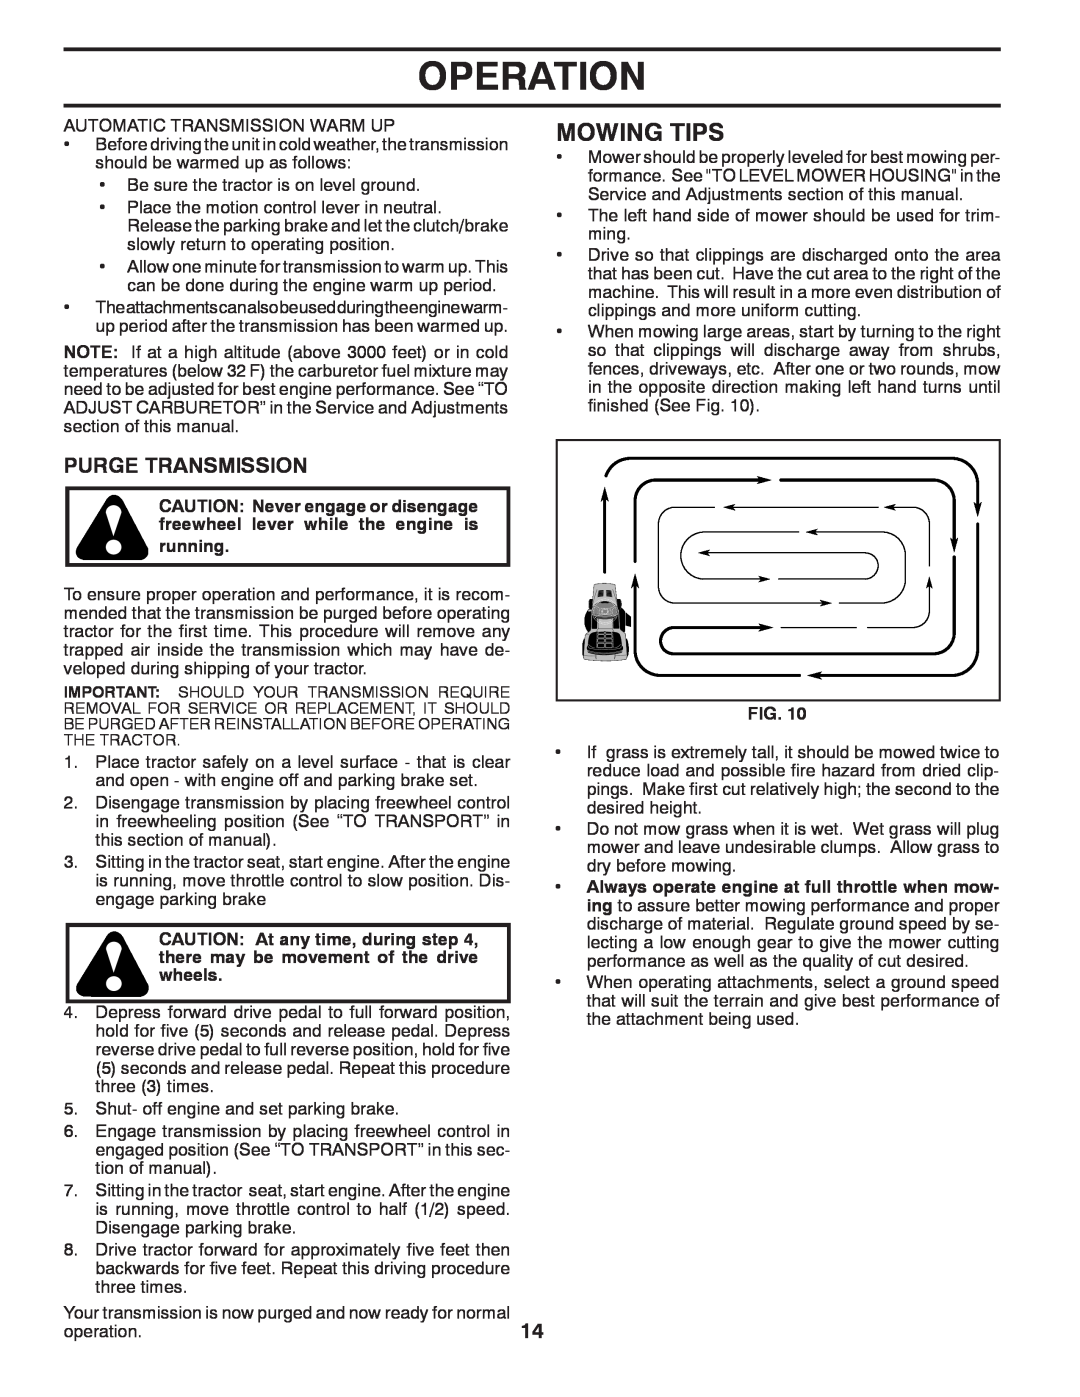 Poulan 411287 manual Mowing Tips, Purge Transmission, Operation 